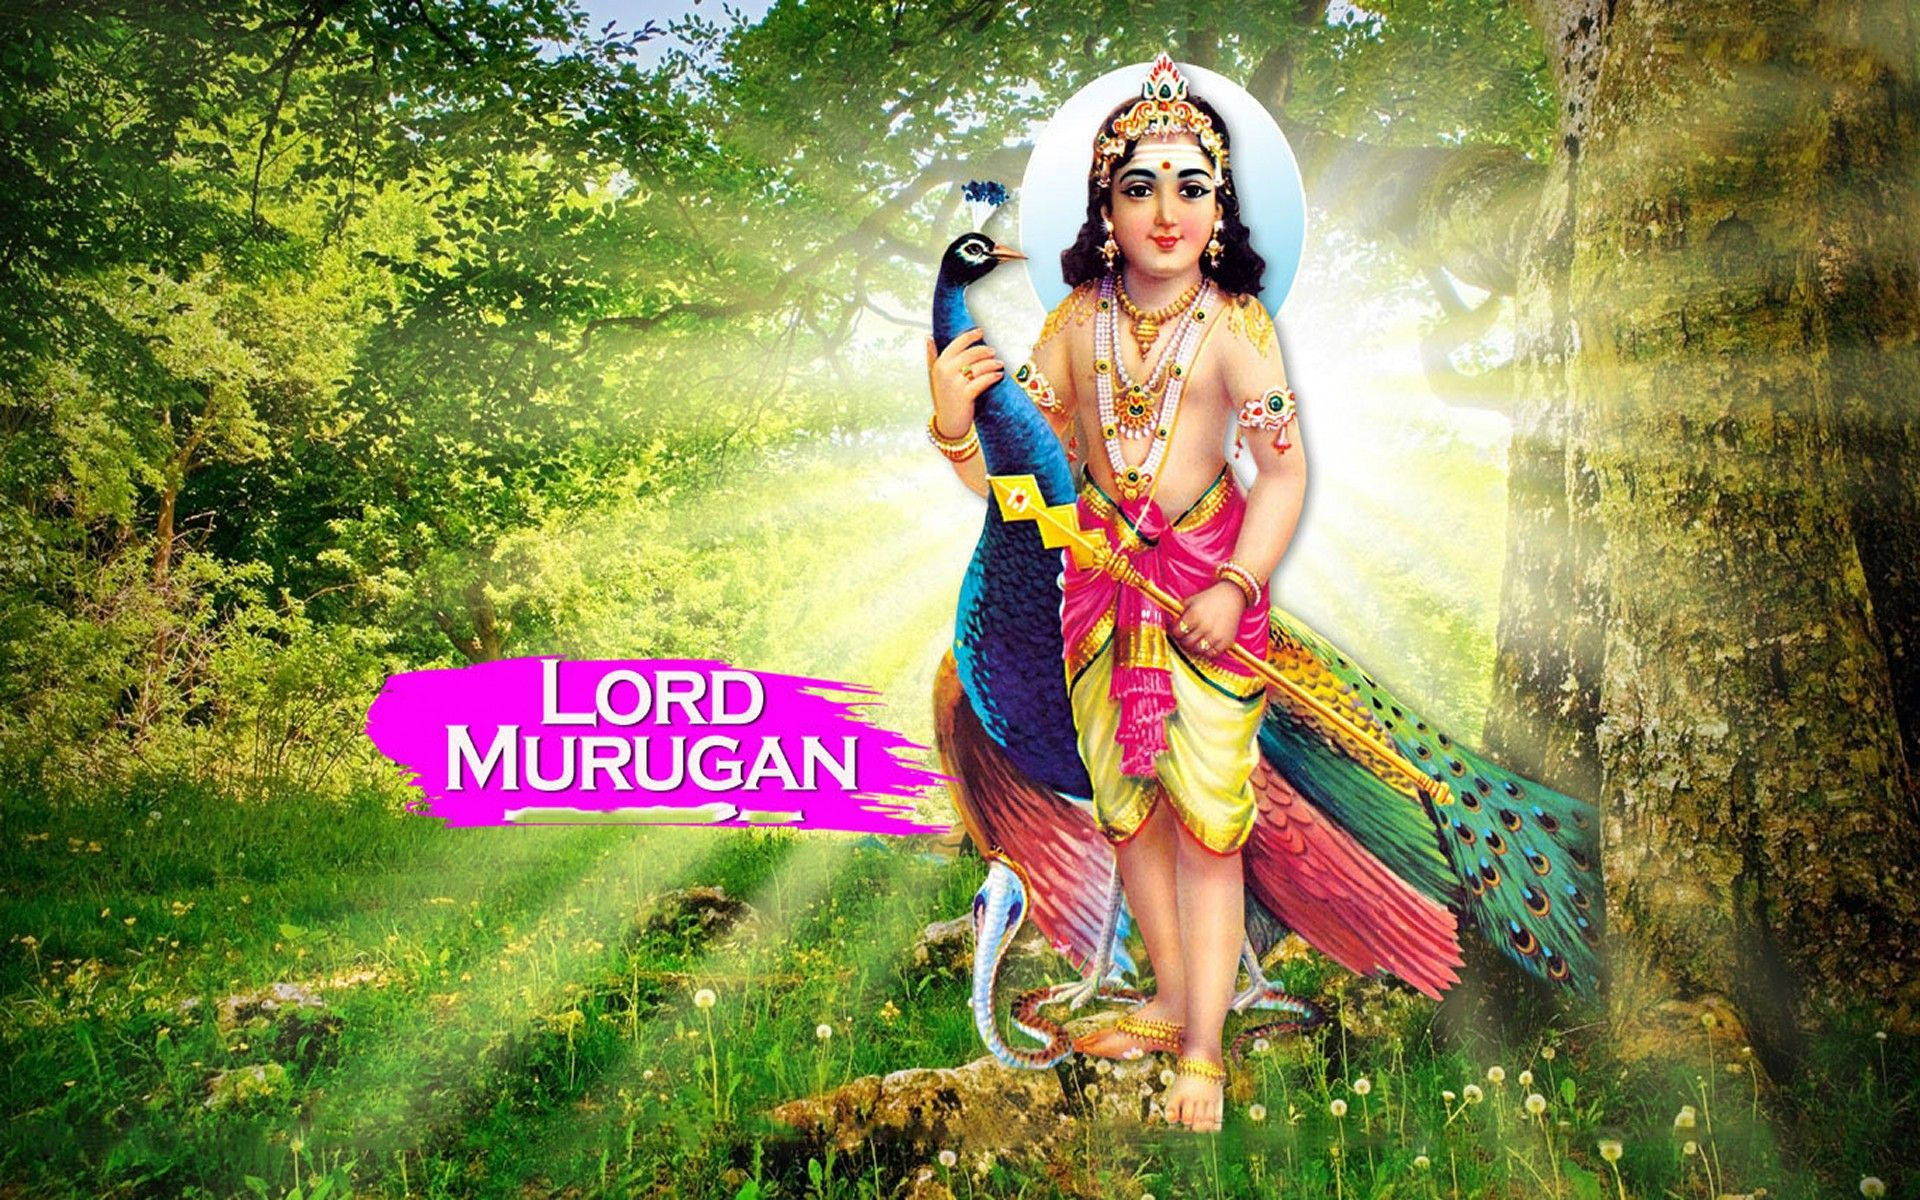 Free Lord Murugan 4k Wallpaper Downloads, [100+] Lord Murugan 4k Wallpapers  for FREE 